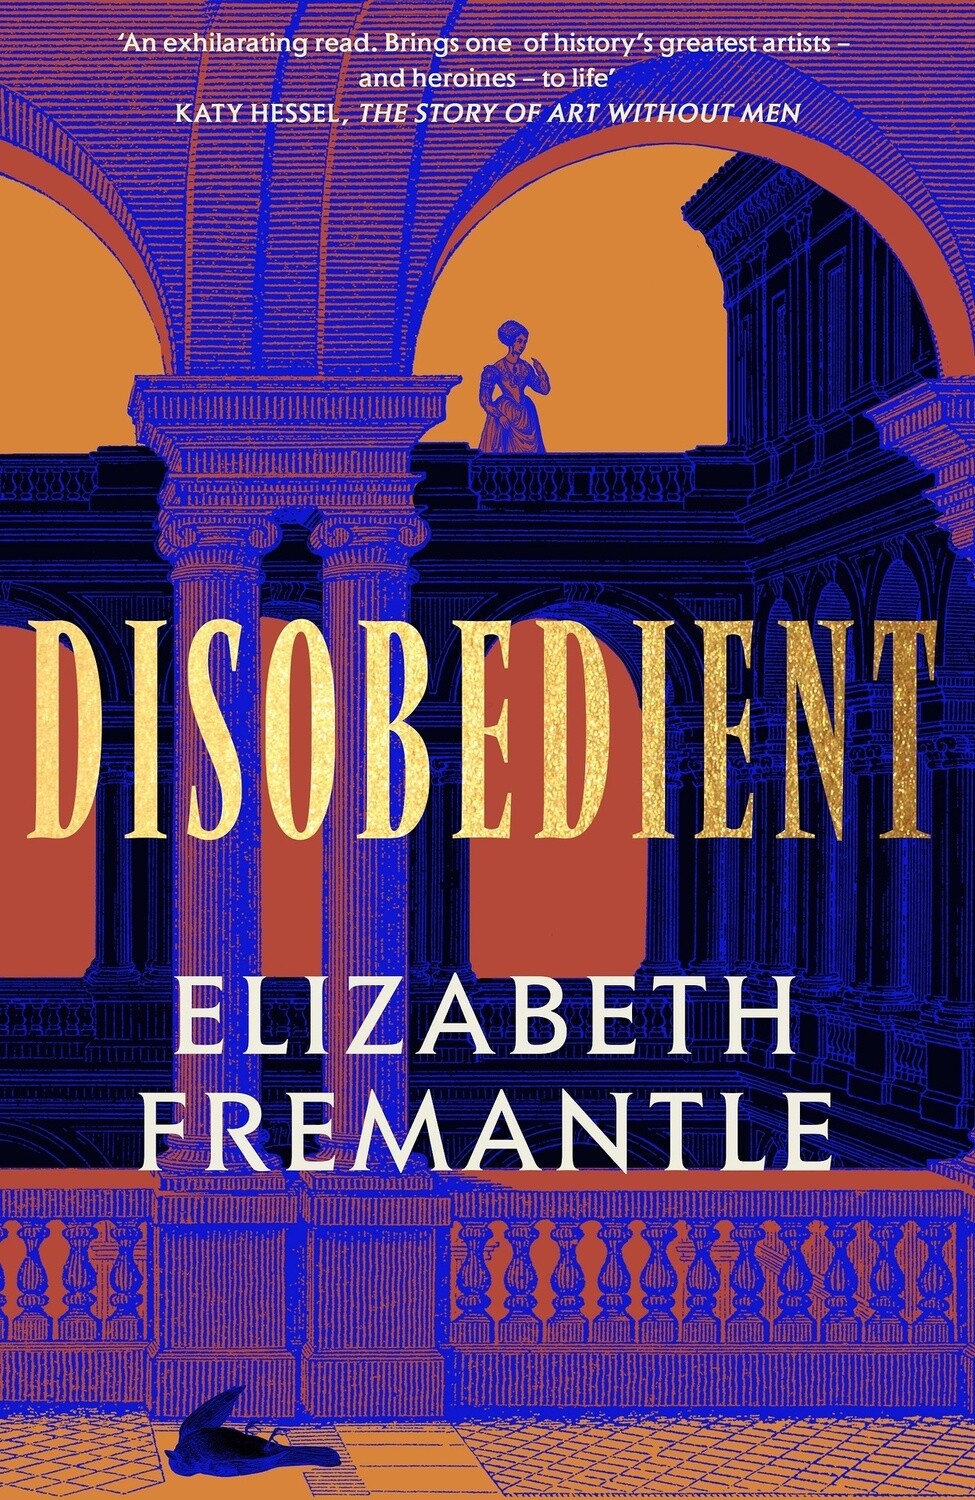 Disobedient by Elizabeth Fremantle